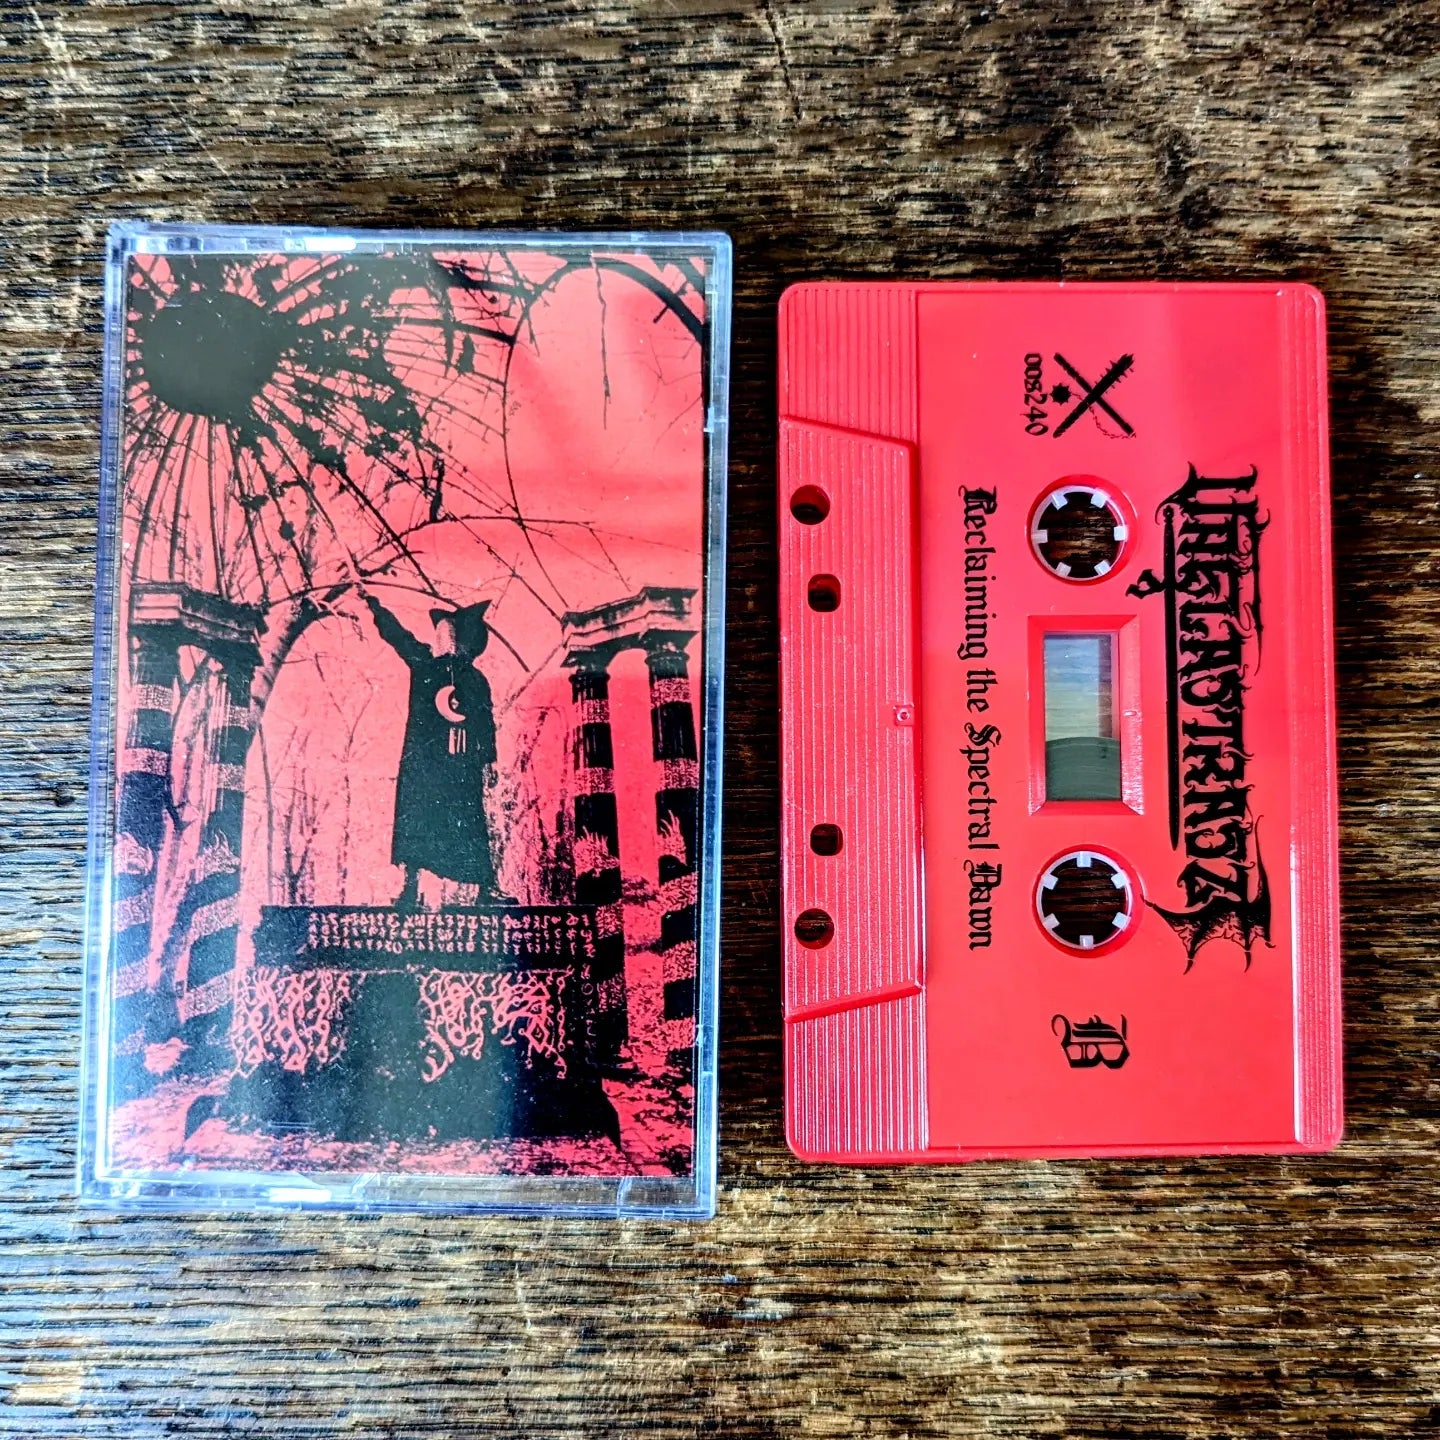 VAELASTRASZ "Reclaiming the Spectral Dawn" cassette tape (lim.200, 2 color options)